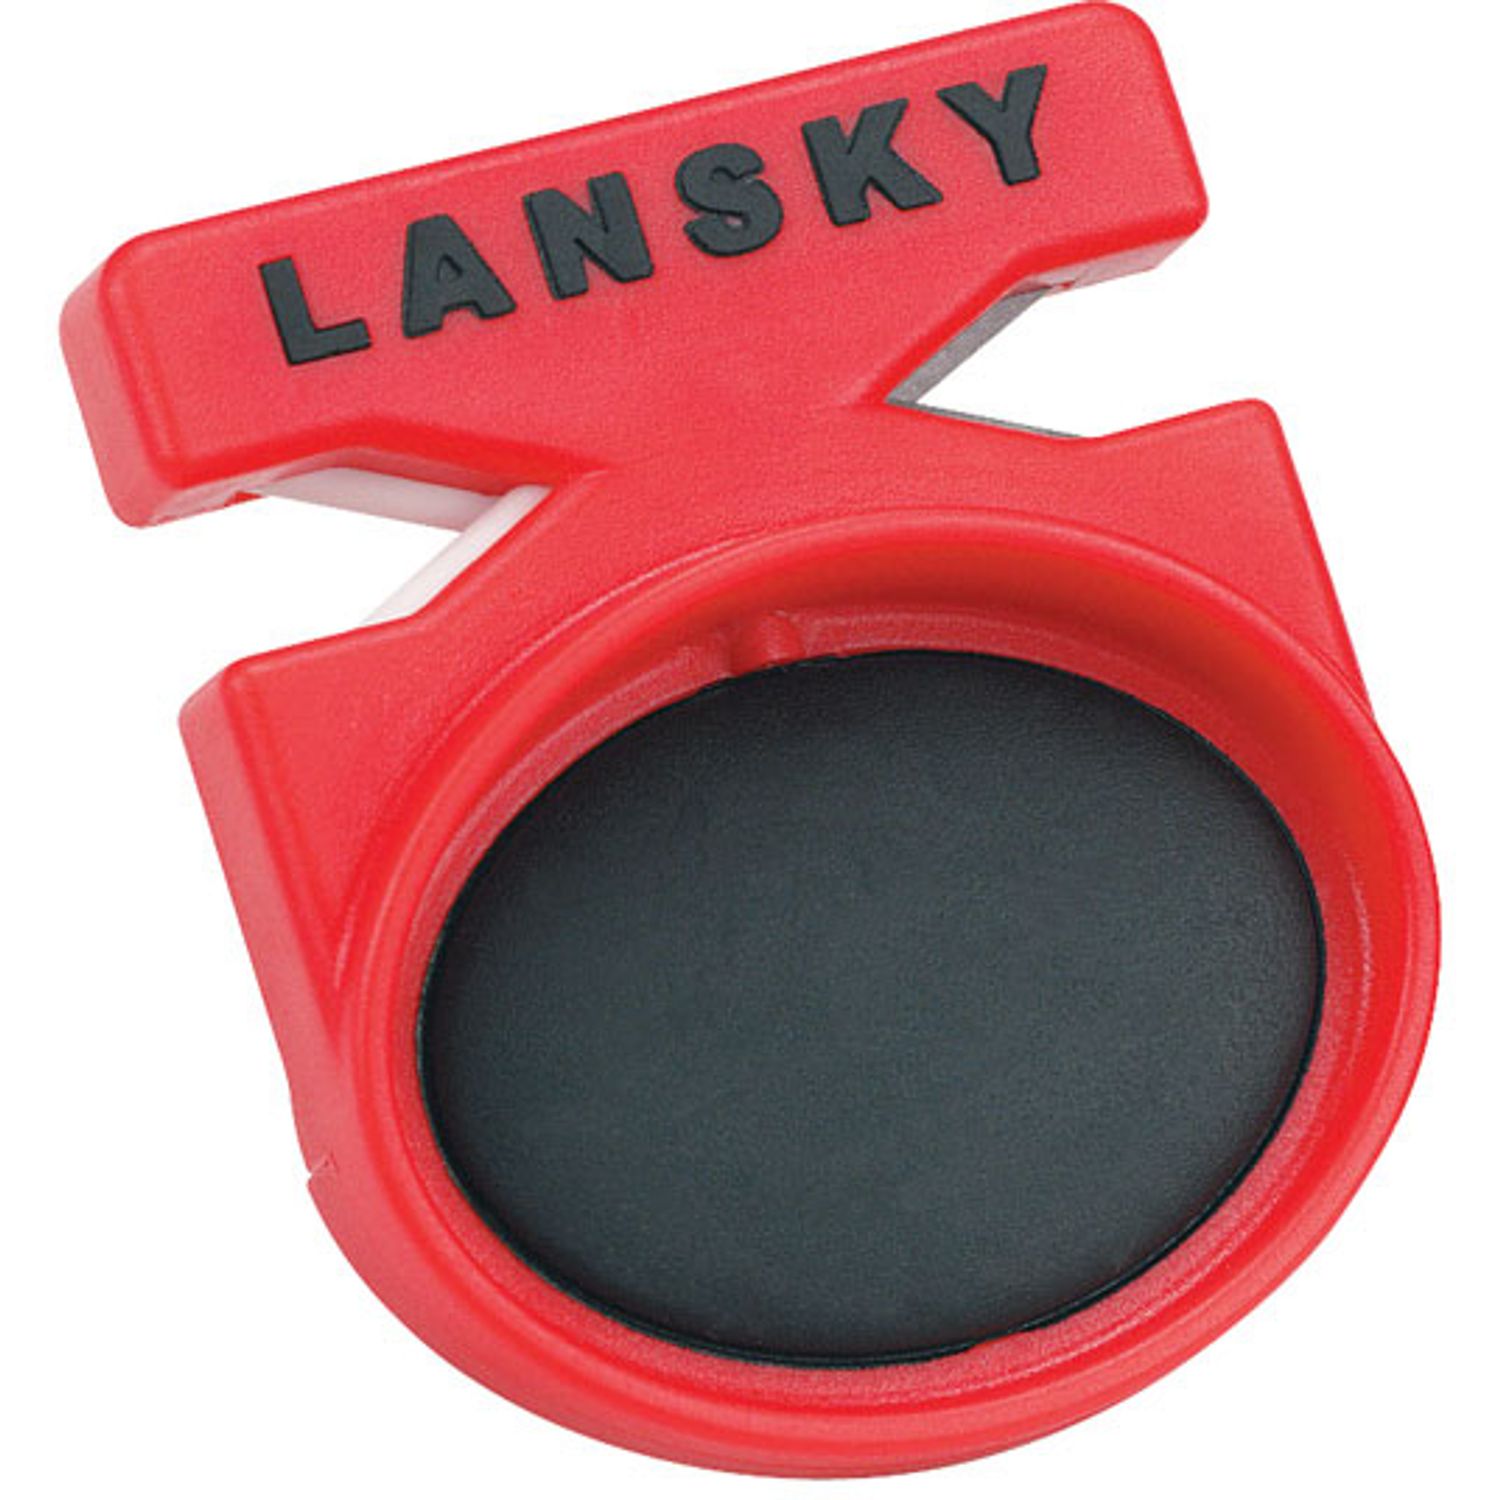 Lansky The Mini Sharpener  Advantageously shopping at